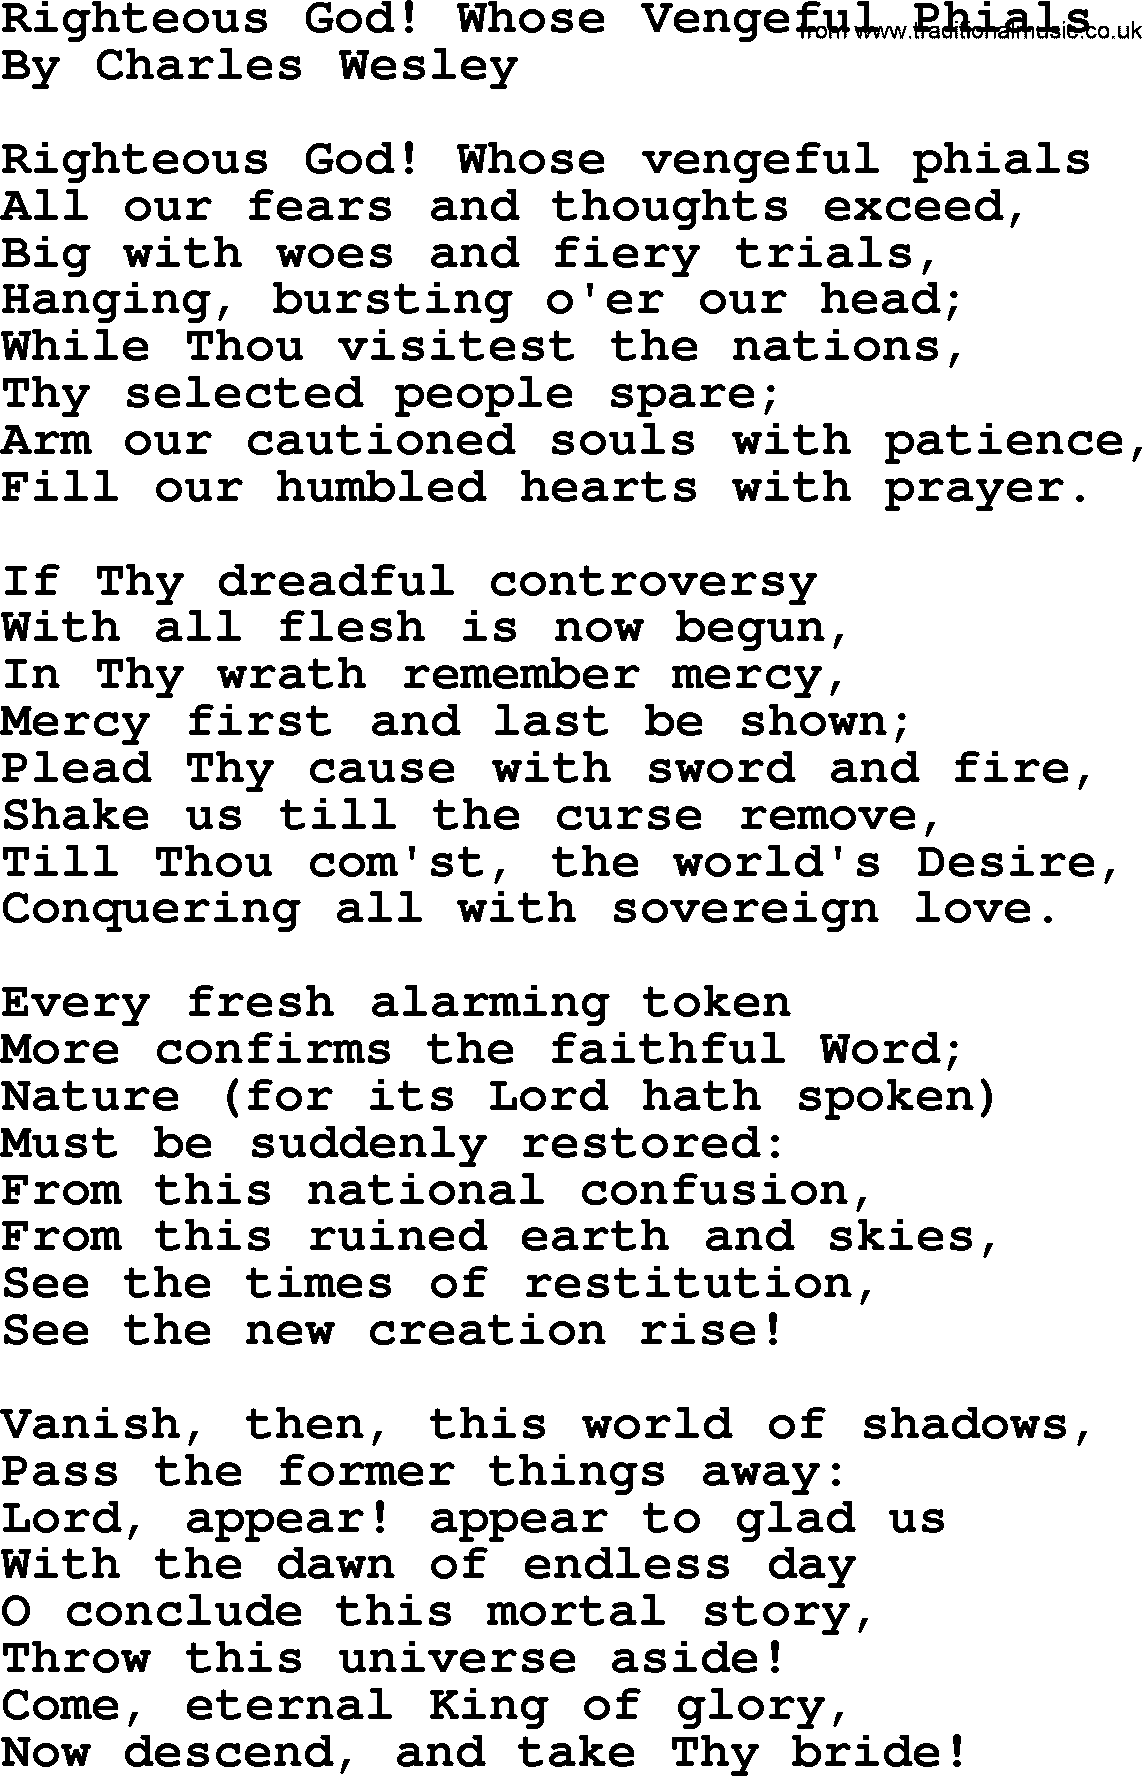 Charles Wesley hymn: Righteous God! Whose Vengeful Phials, lyrics